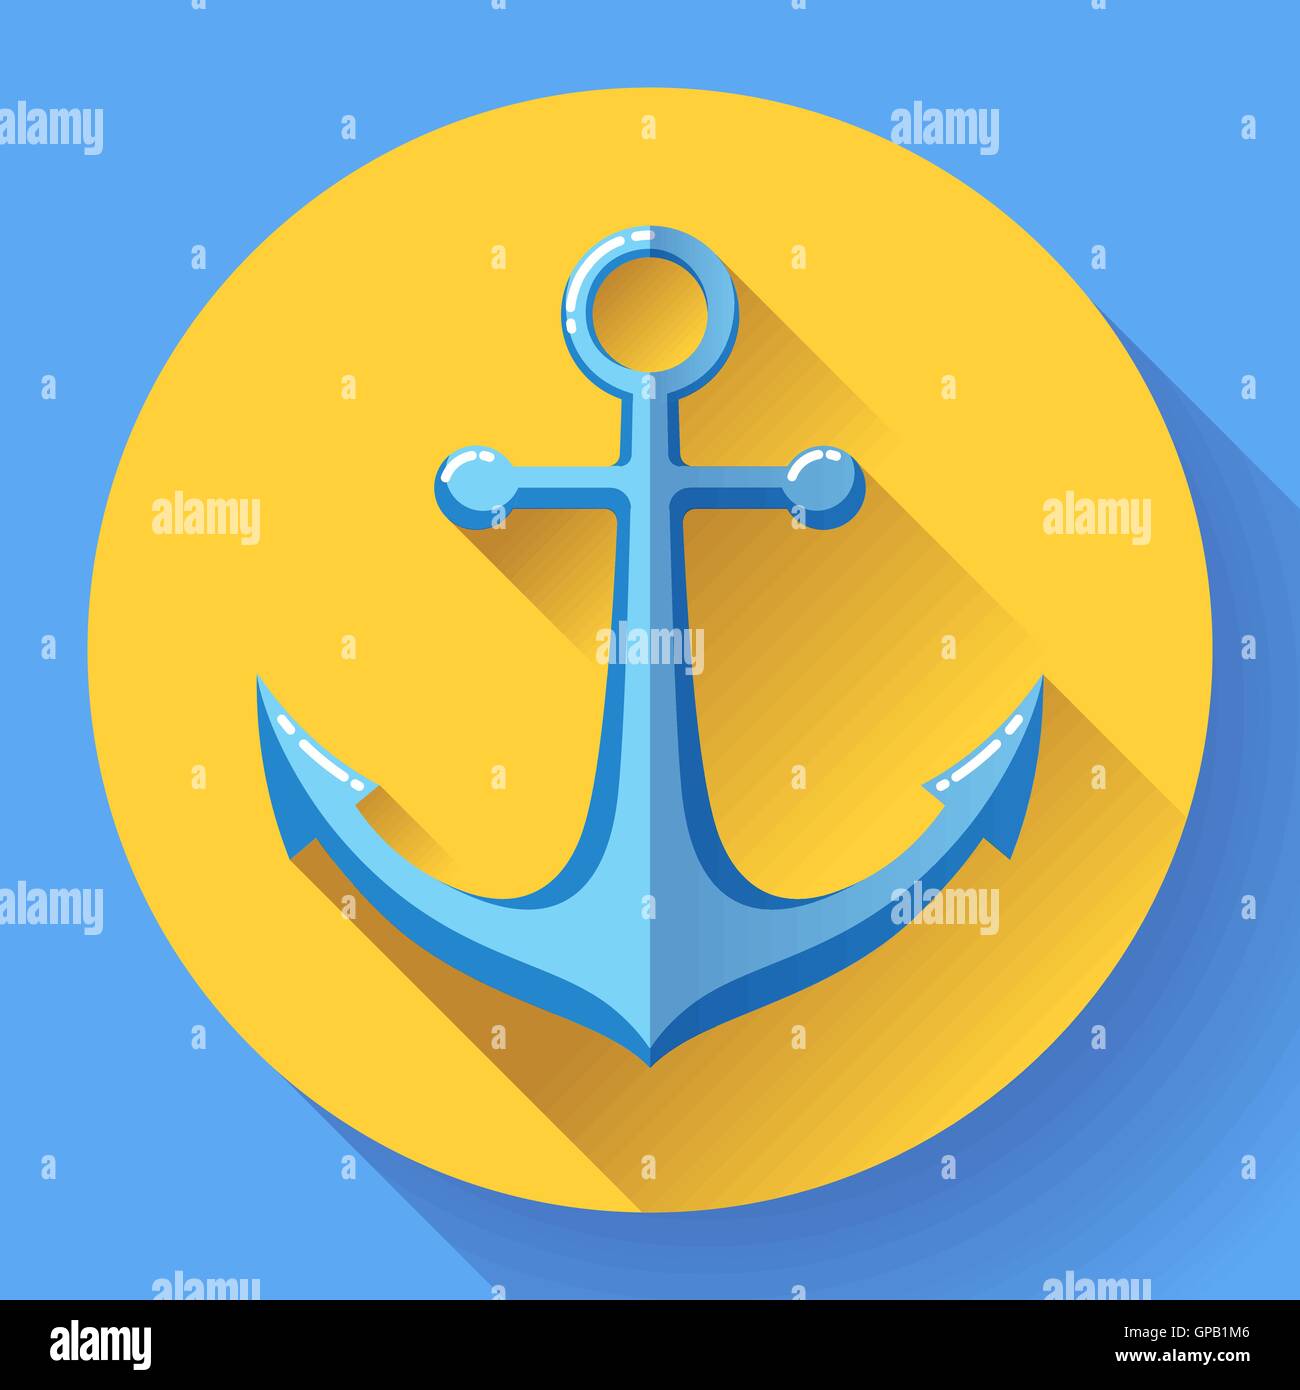 Anchor text icon, vector illustration. Flat design style. Stock Vector